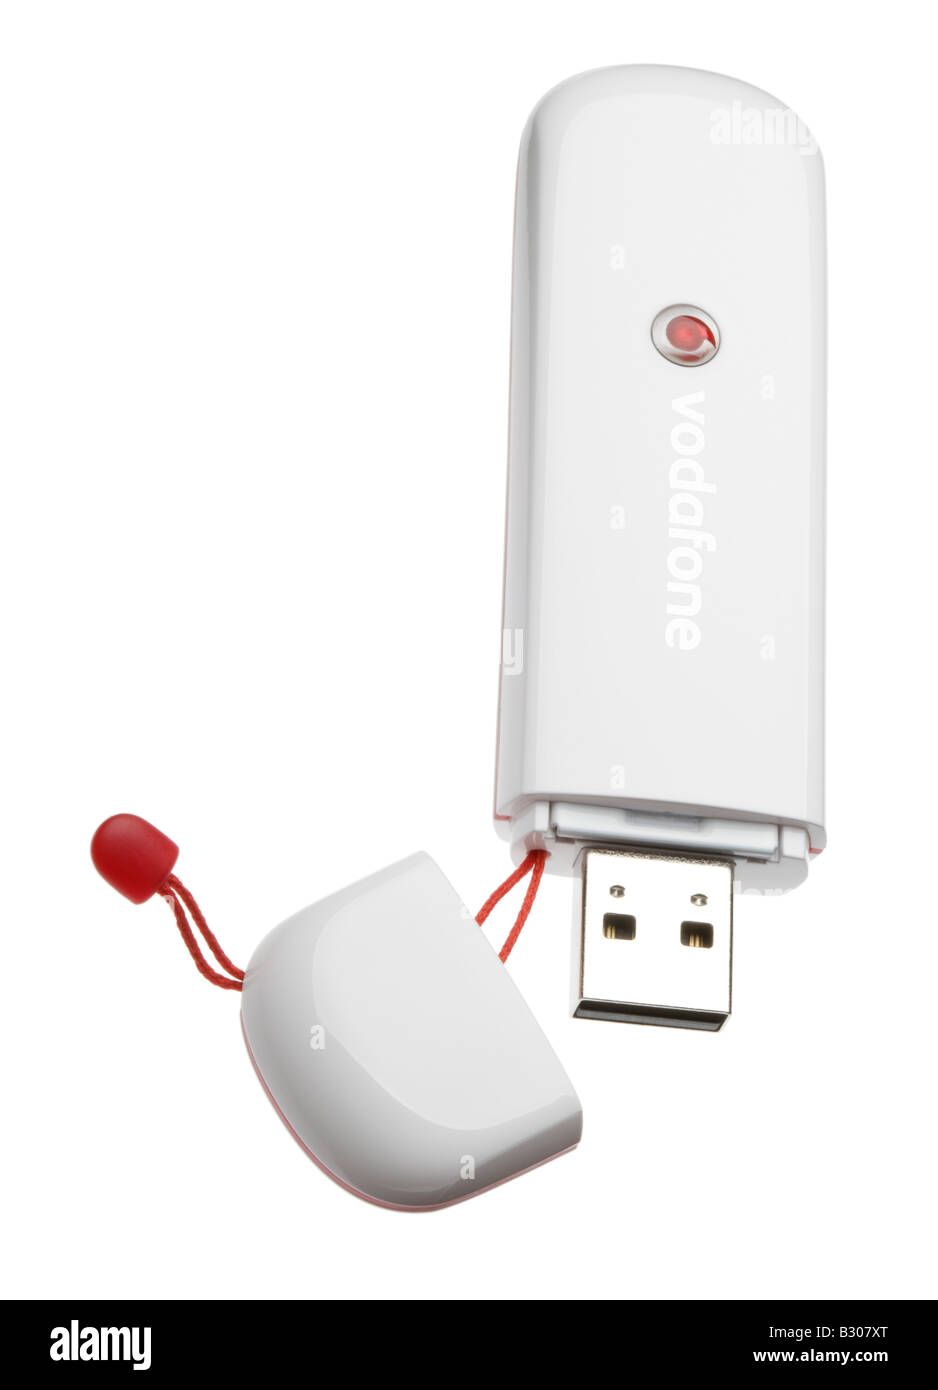 Vodafone USB broadband dongle Stock Photo - Alamy